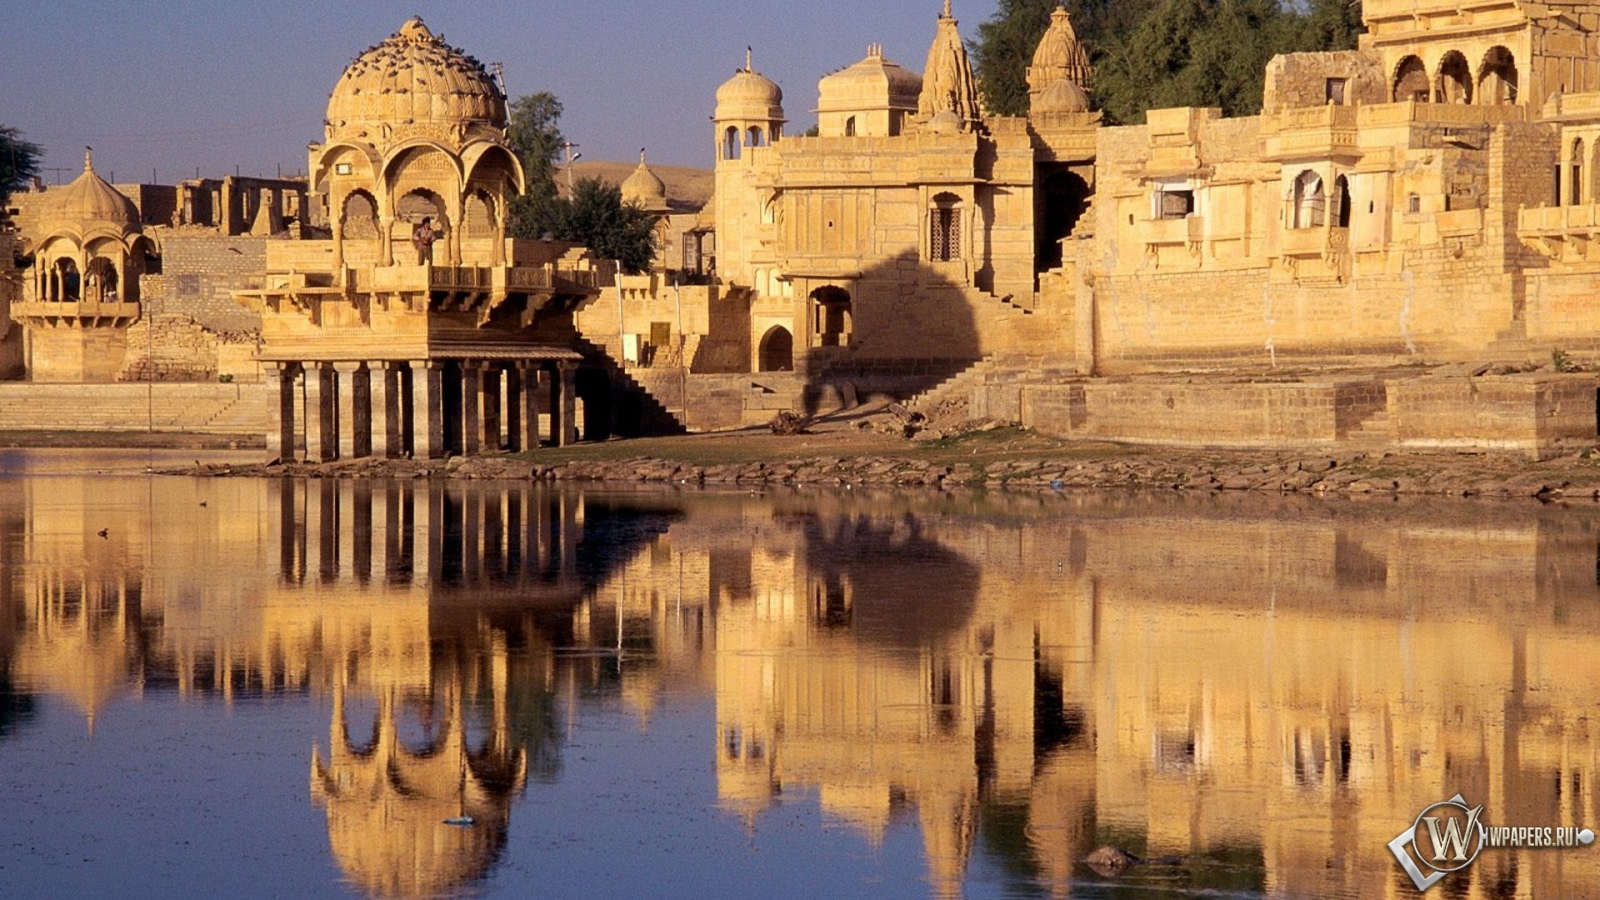 Jaisalmer - Rajasthan - India  1600x900